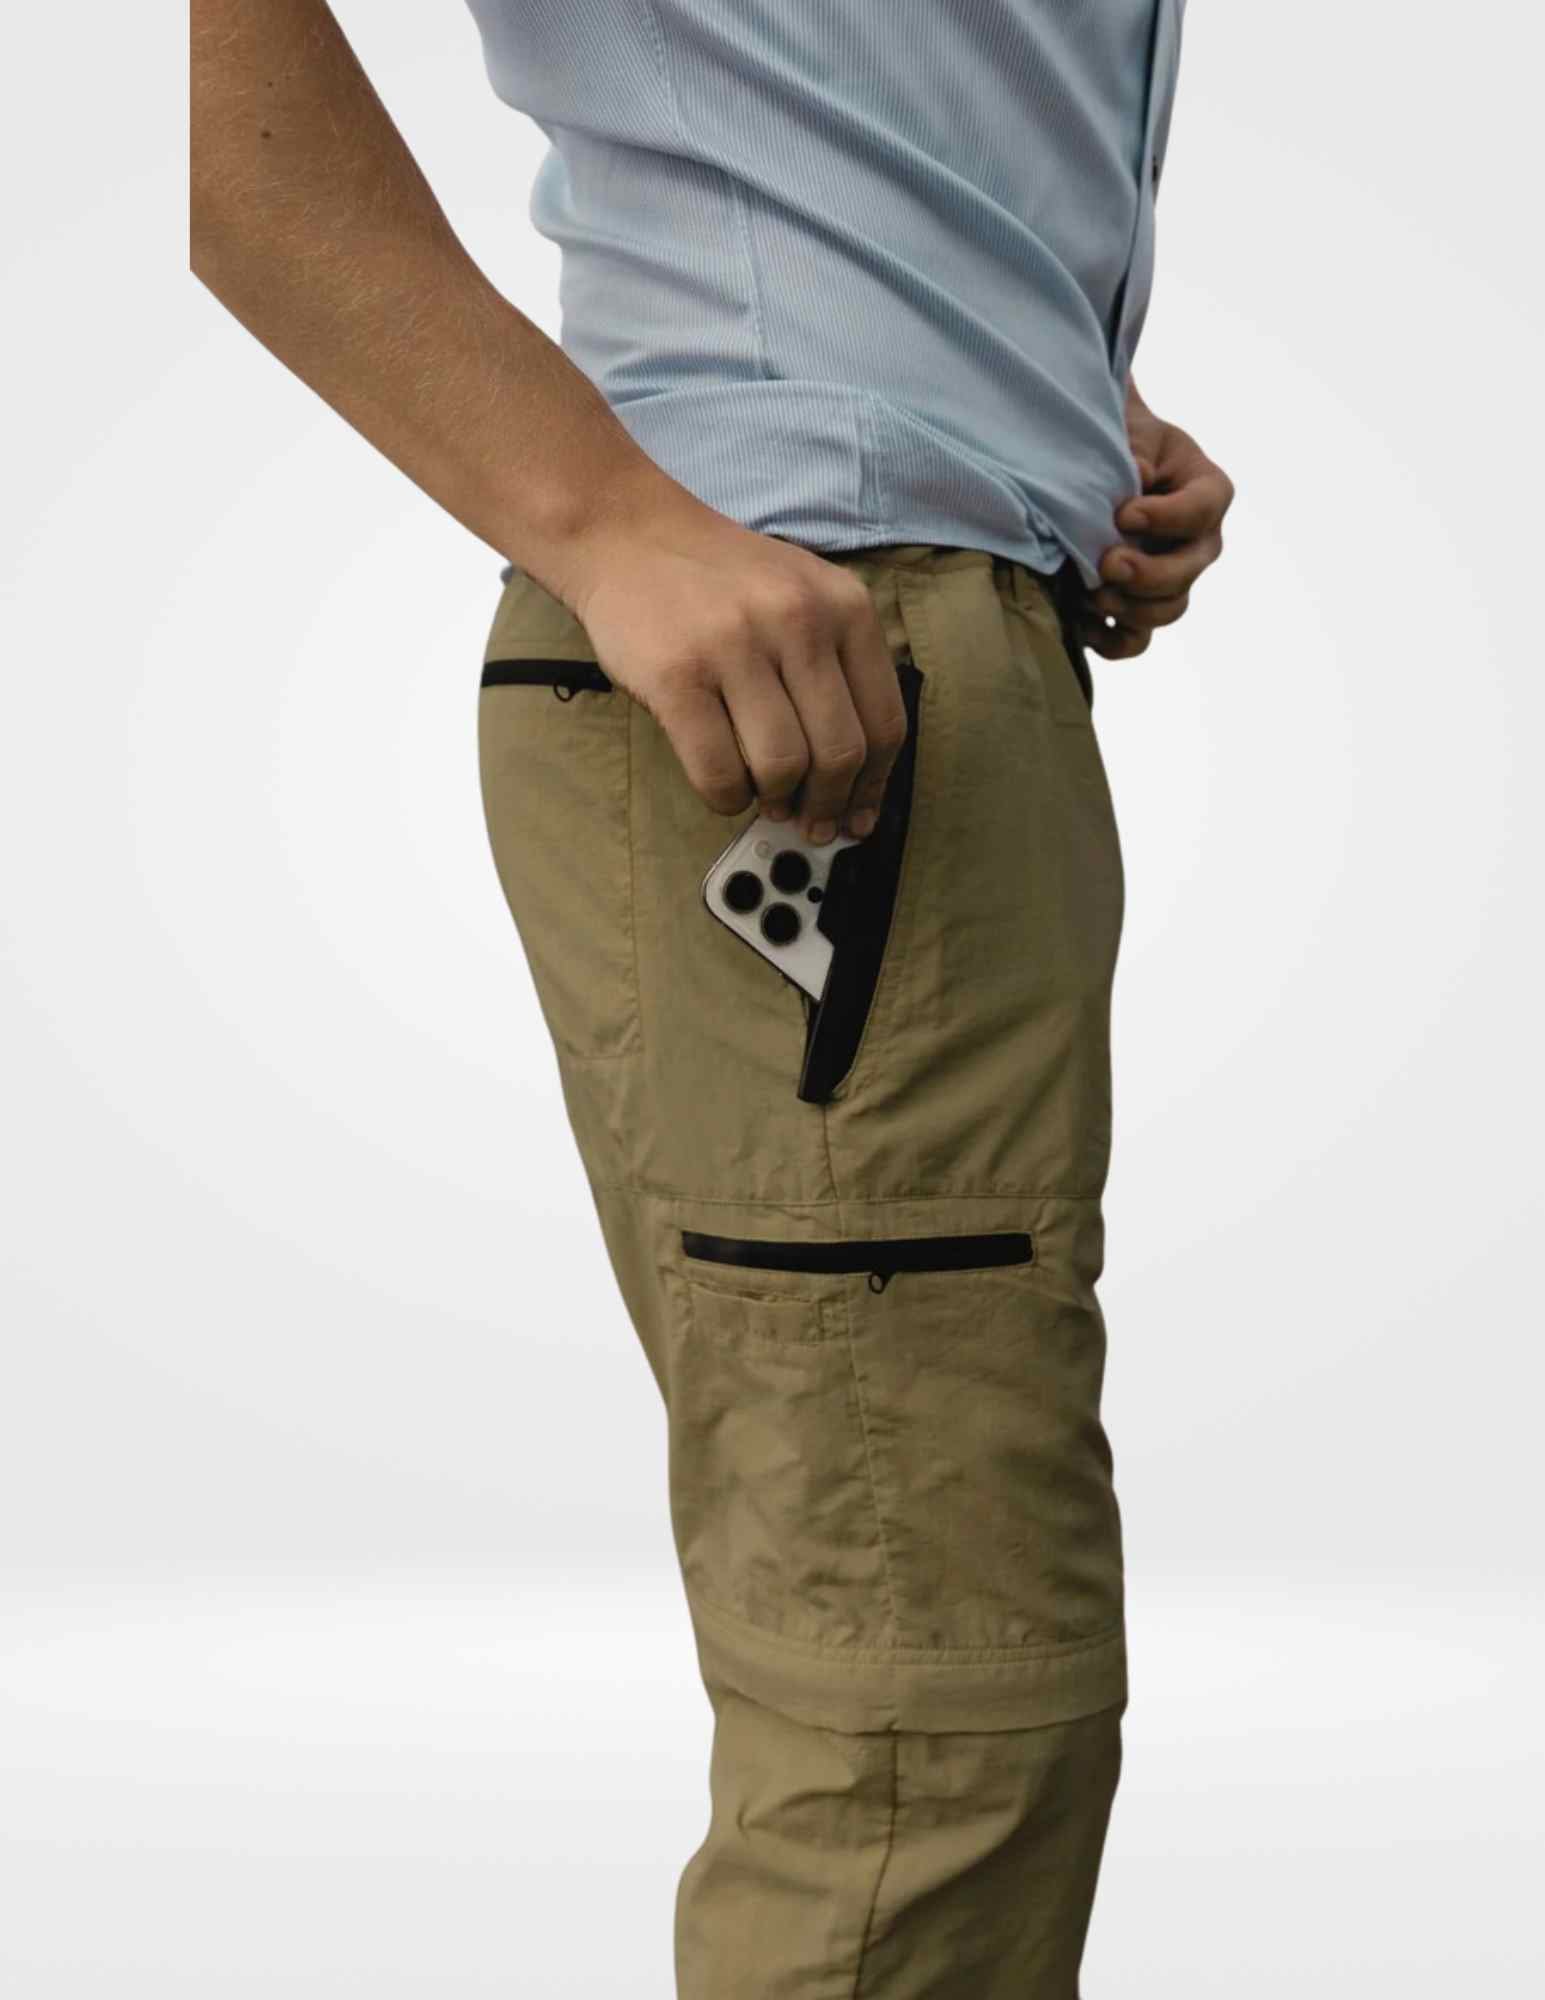 Waterproof Quick Dry Fishing Pants for Men, Outdoor Multi-Pocket